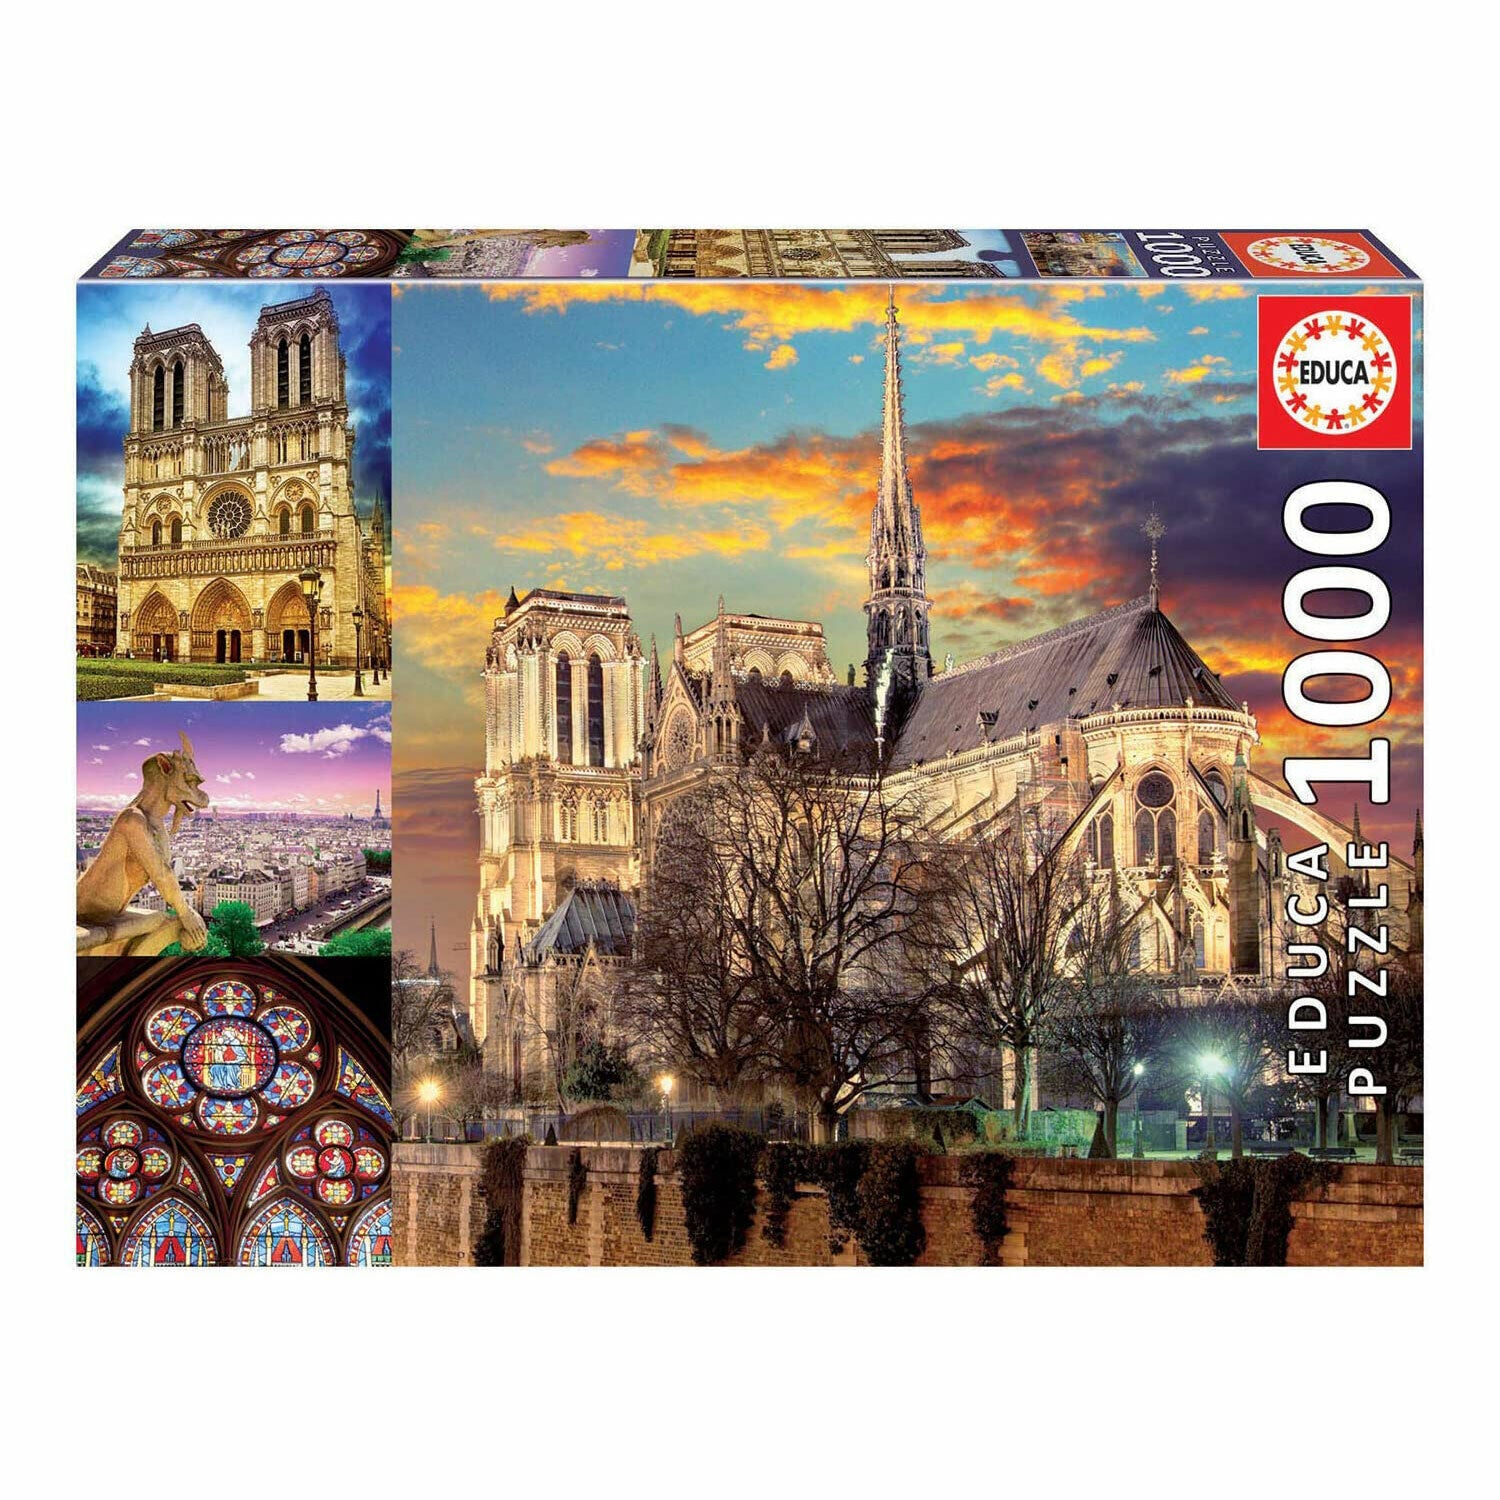 New Educa Borras Notre Dame 1000 Piece Jigsaw Puzzle Collage